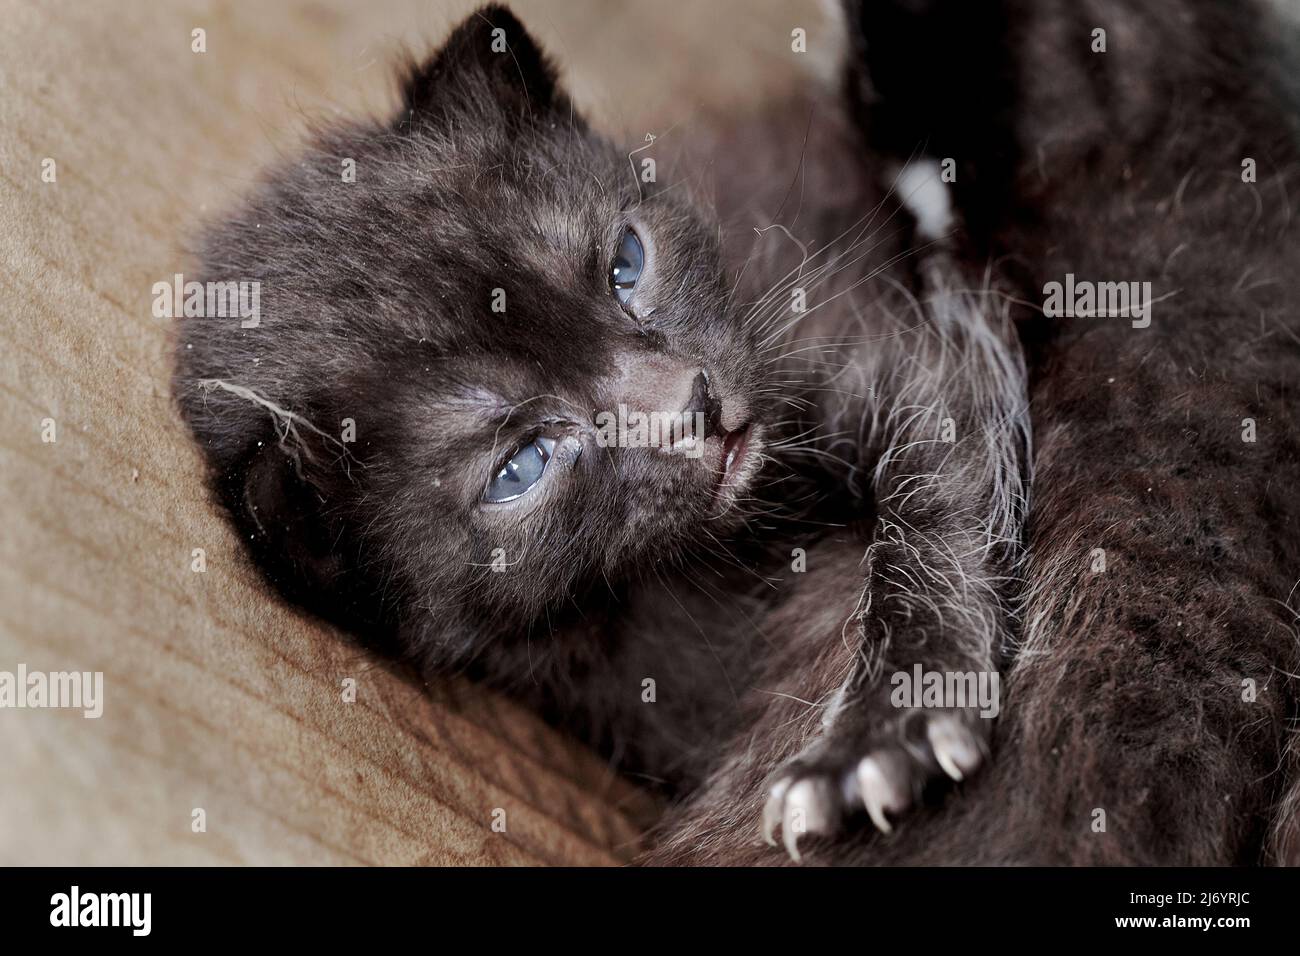 One-week-old kitten, Tarragona, Spain. Stock Photo